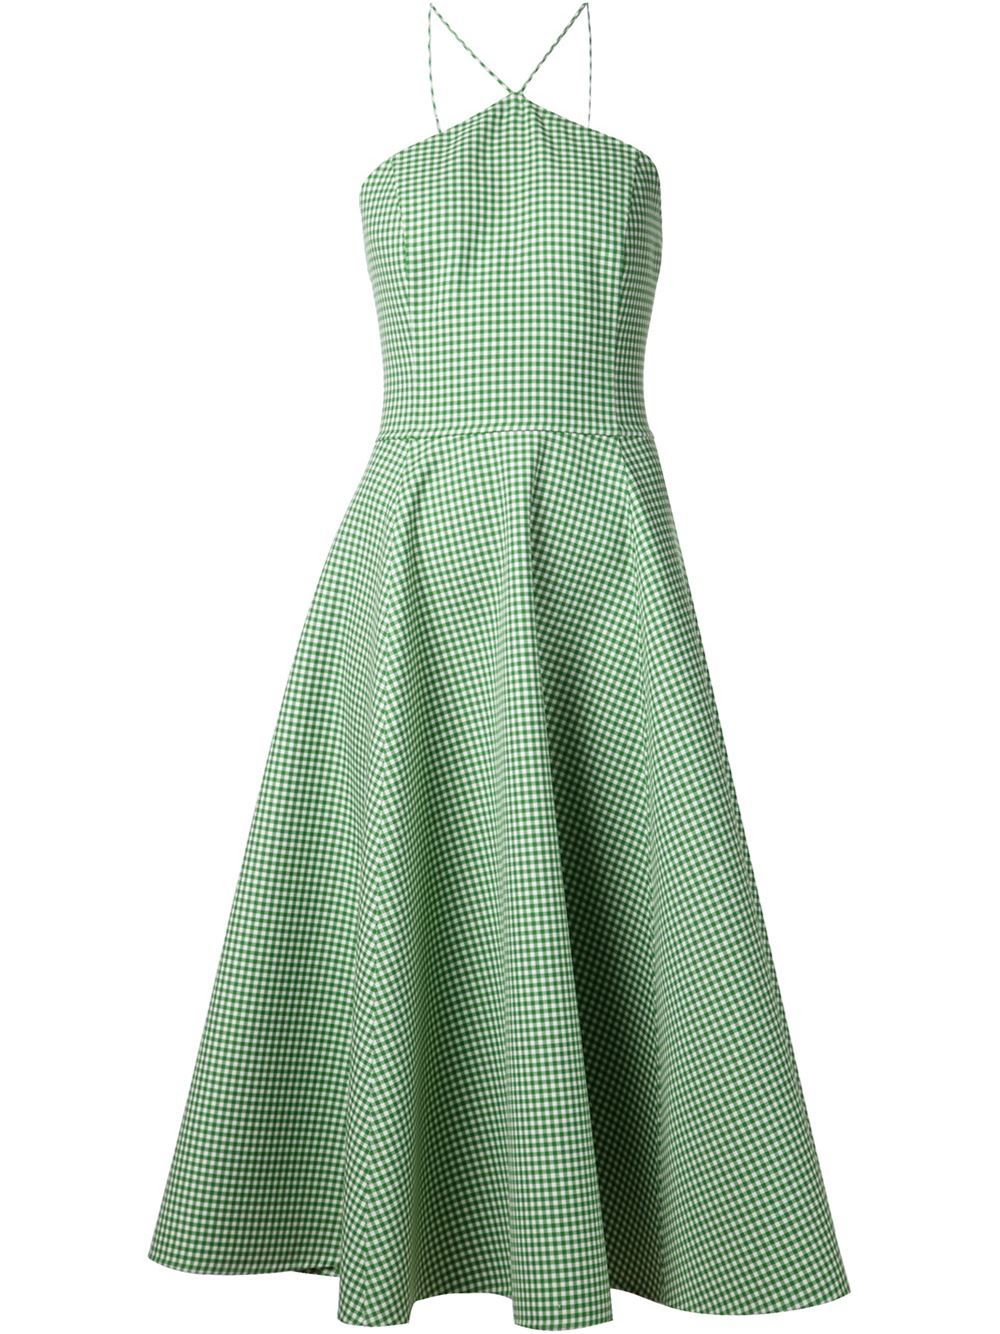 Michael Kors Gingham Flared Dress in Green | Lyst